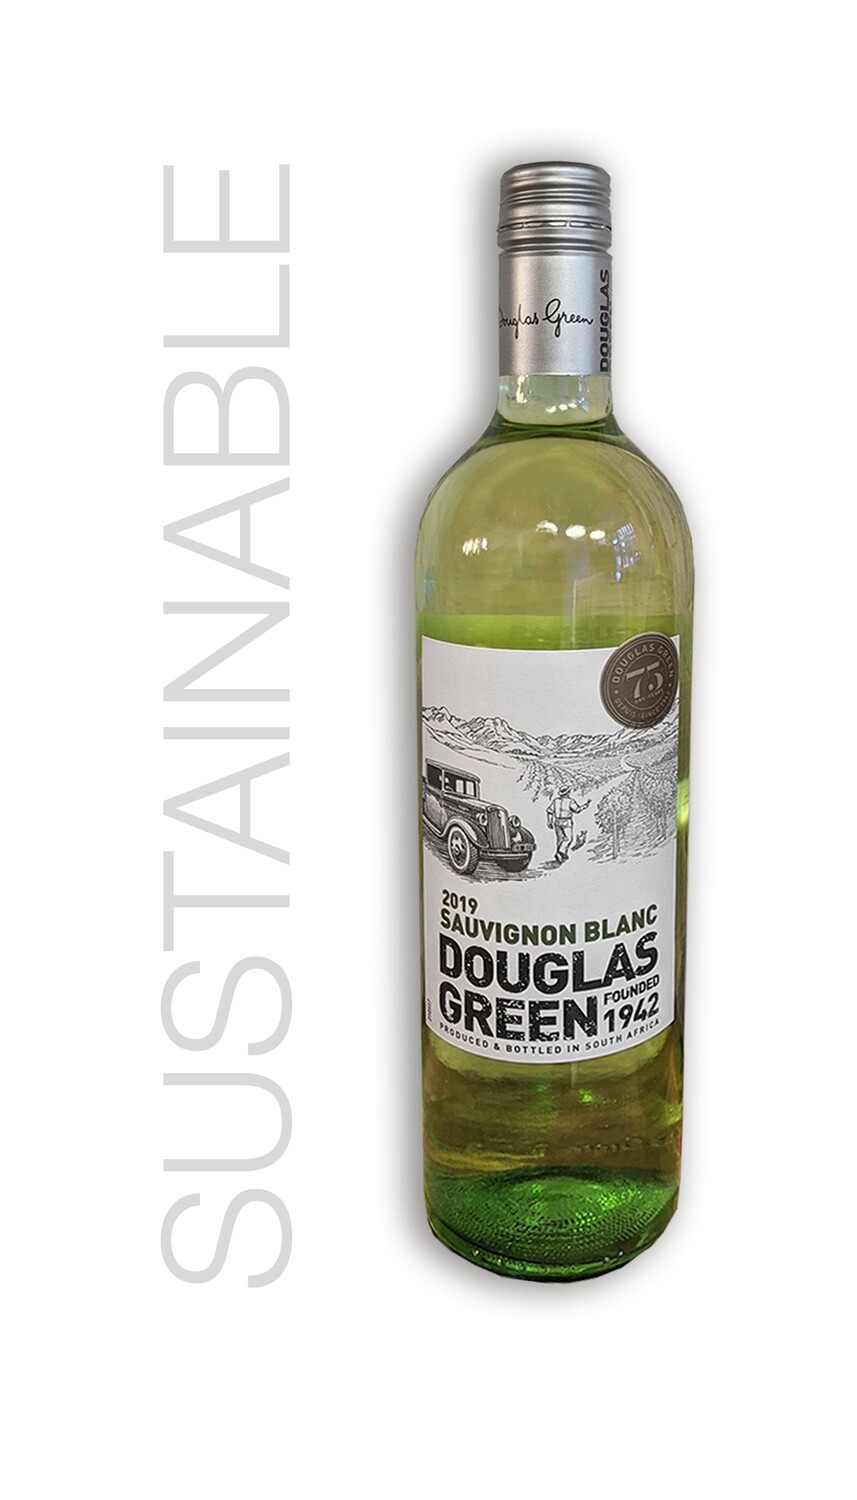 Douglas Green - Sauvignon Blanc 2018 